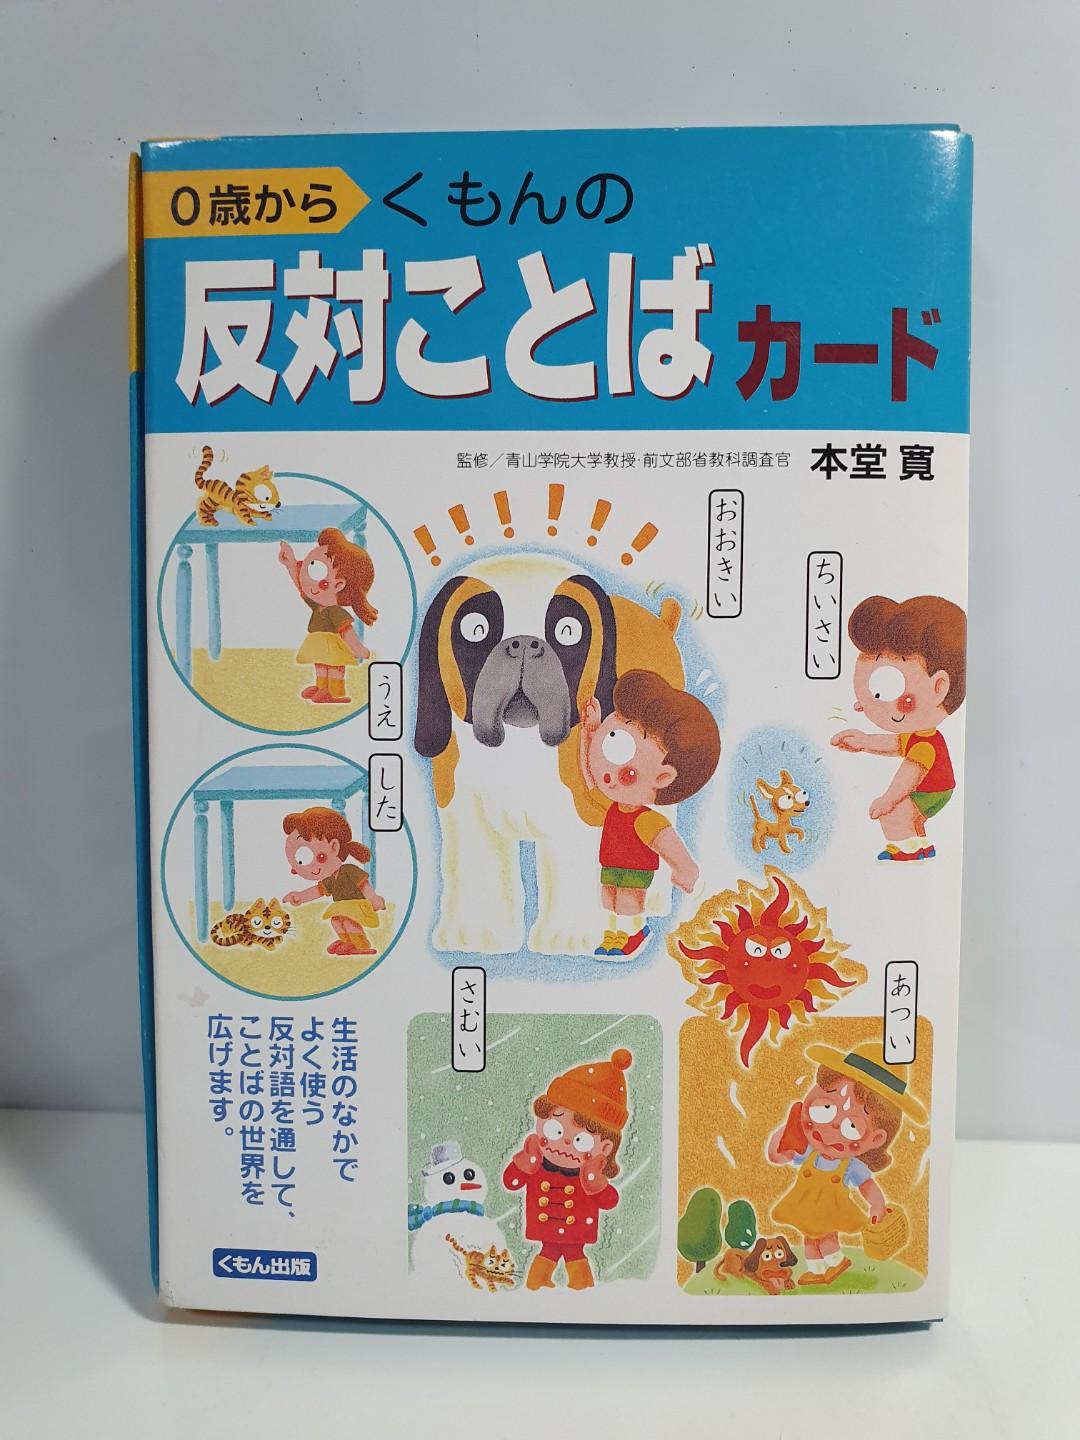 Japanese Vocabulary Flashcards Hobbies Toys Books Magazines Assessment Books On Carousell